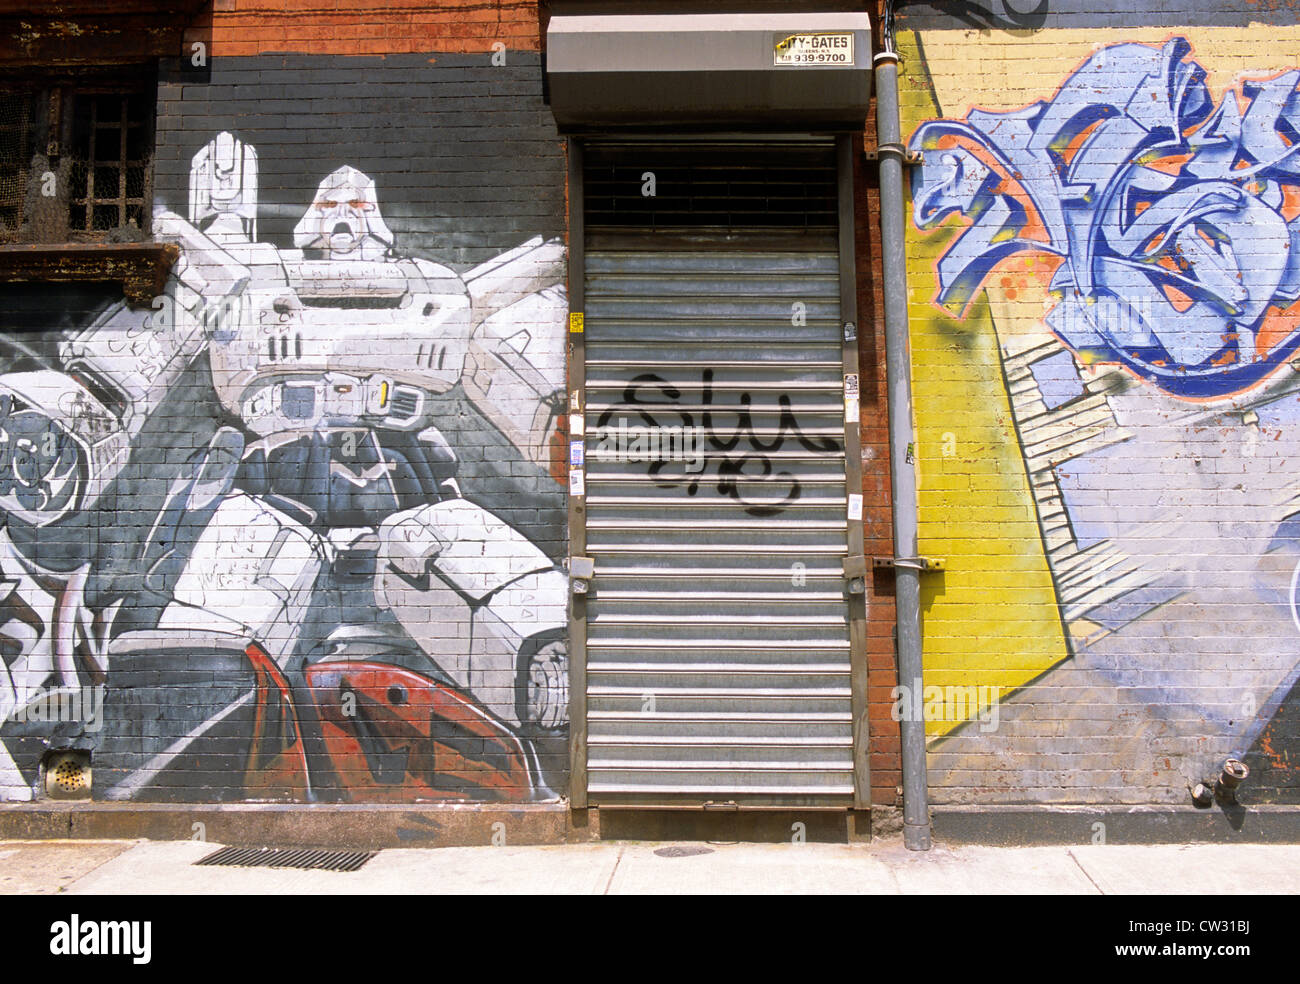 Street art New York. Graffiti wall painting in the Barrio. Pop culture mural in East Spanish Harlem, Upper Manhattan, New York City, USA Stock Photo